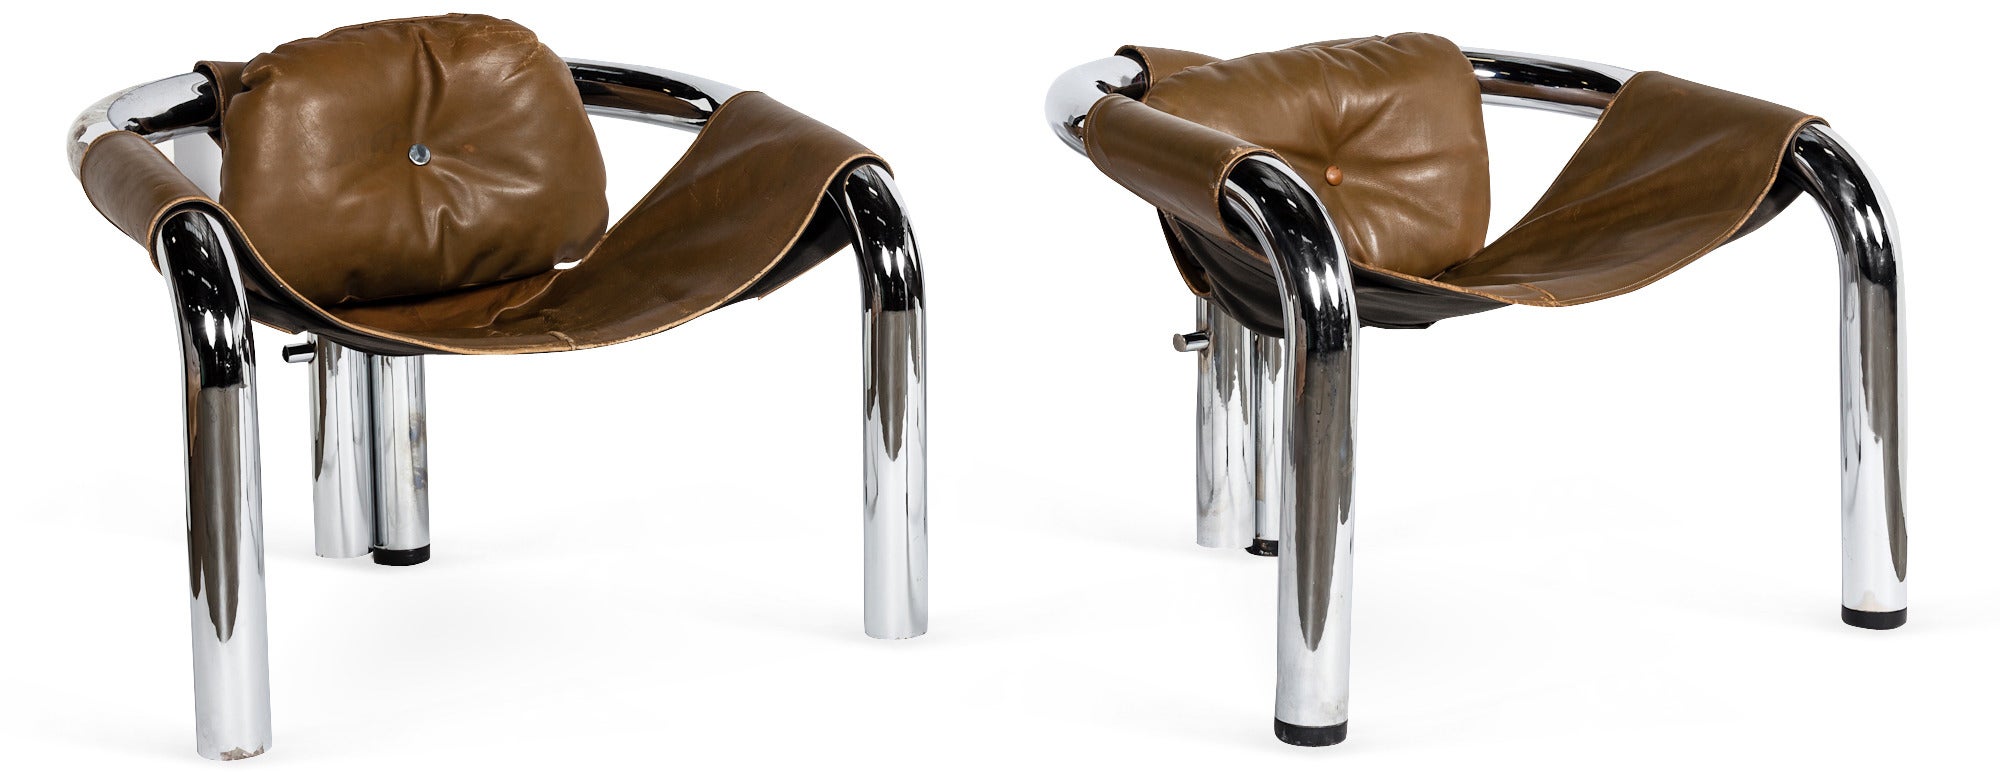 A Pair of 1970s Three Legged Chrome Sling Chairs